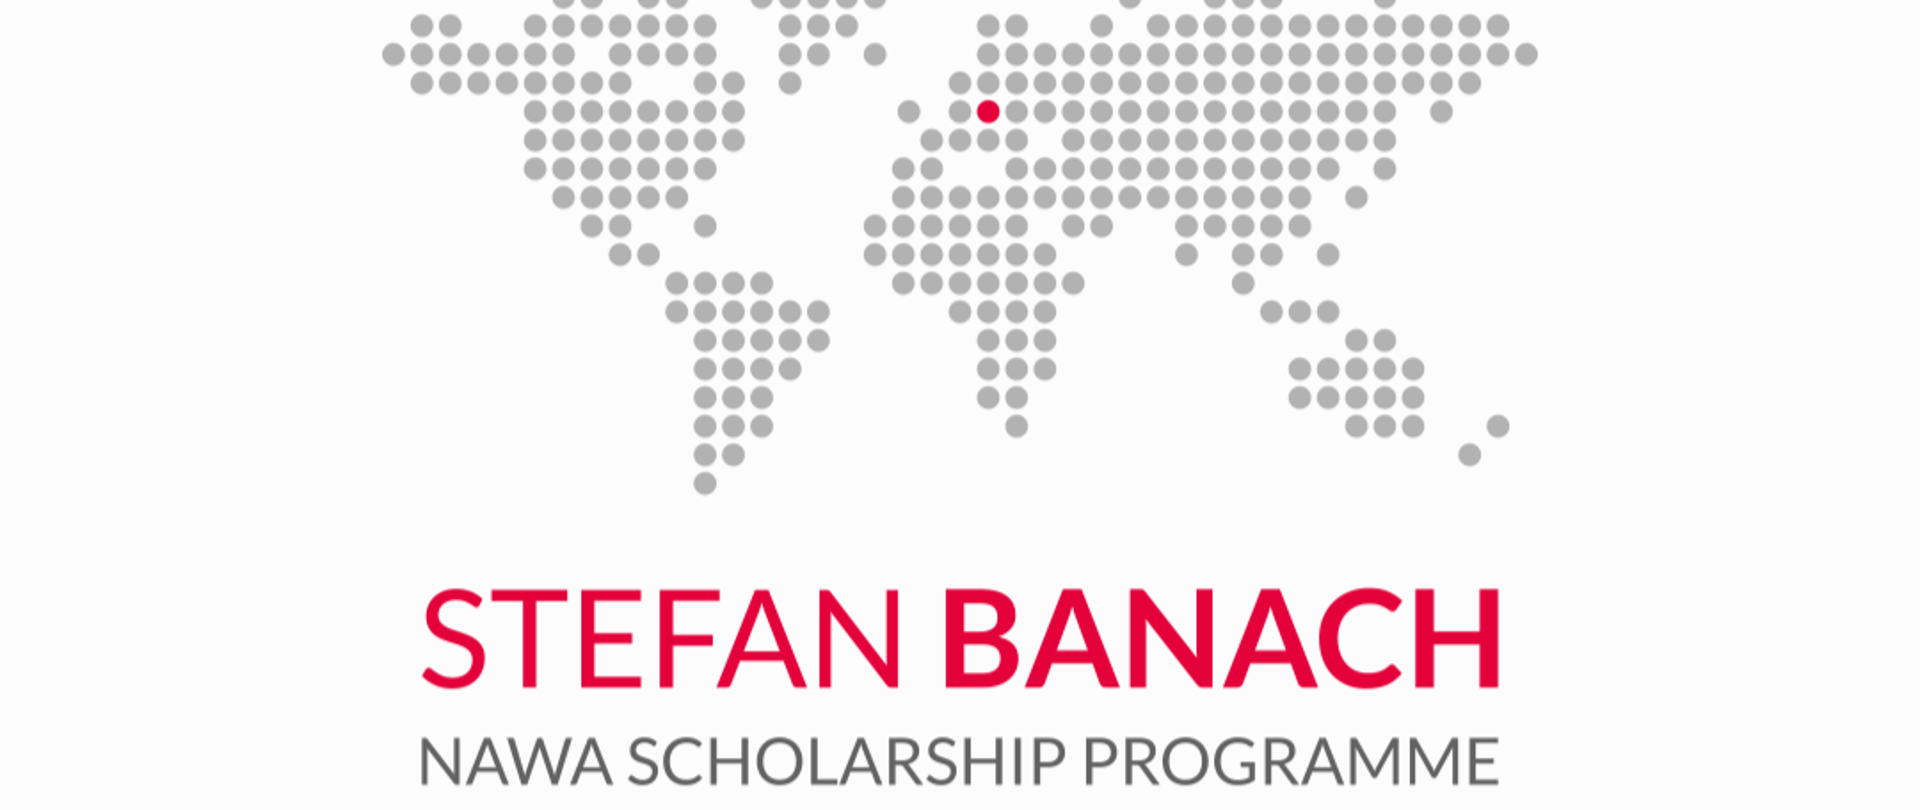 Stefan Banach - NAWA Scholarship Programme